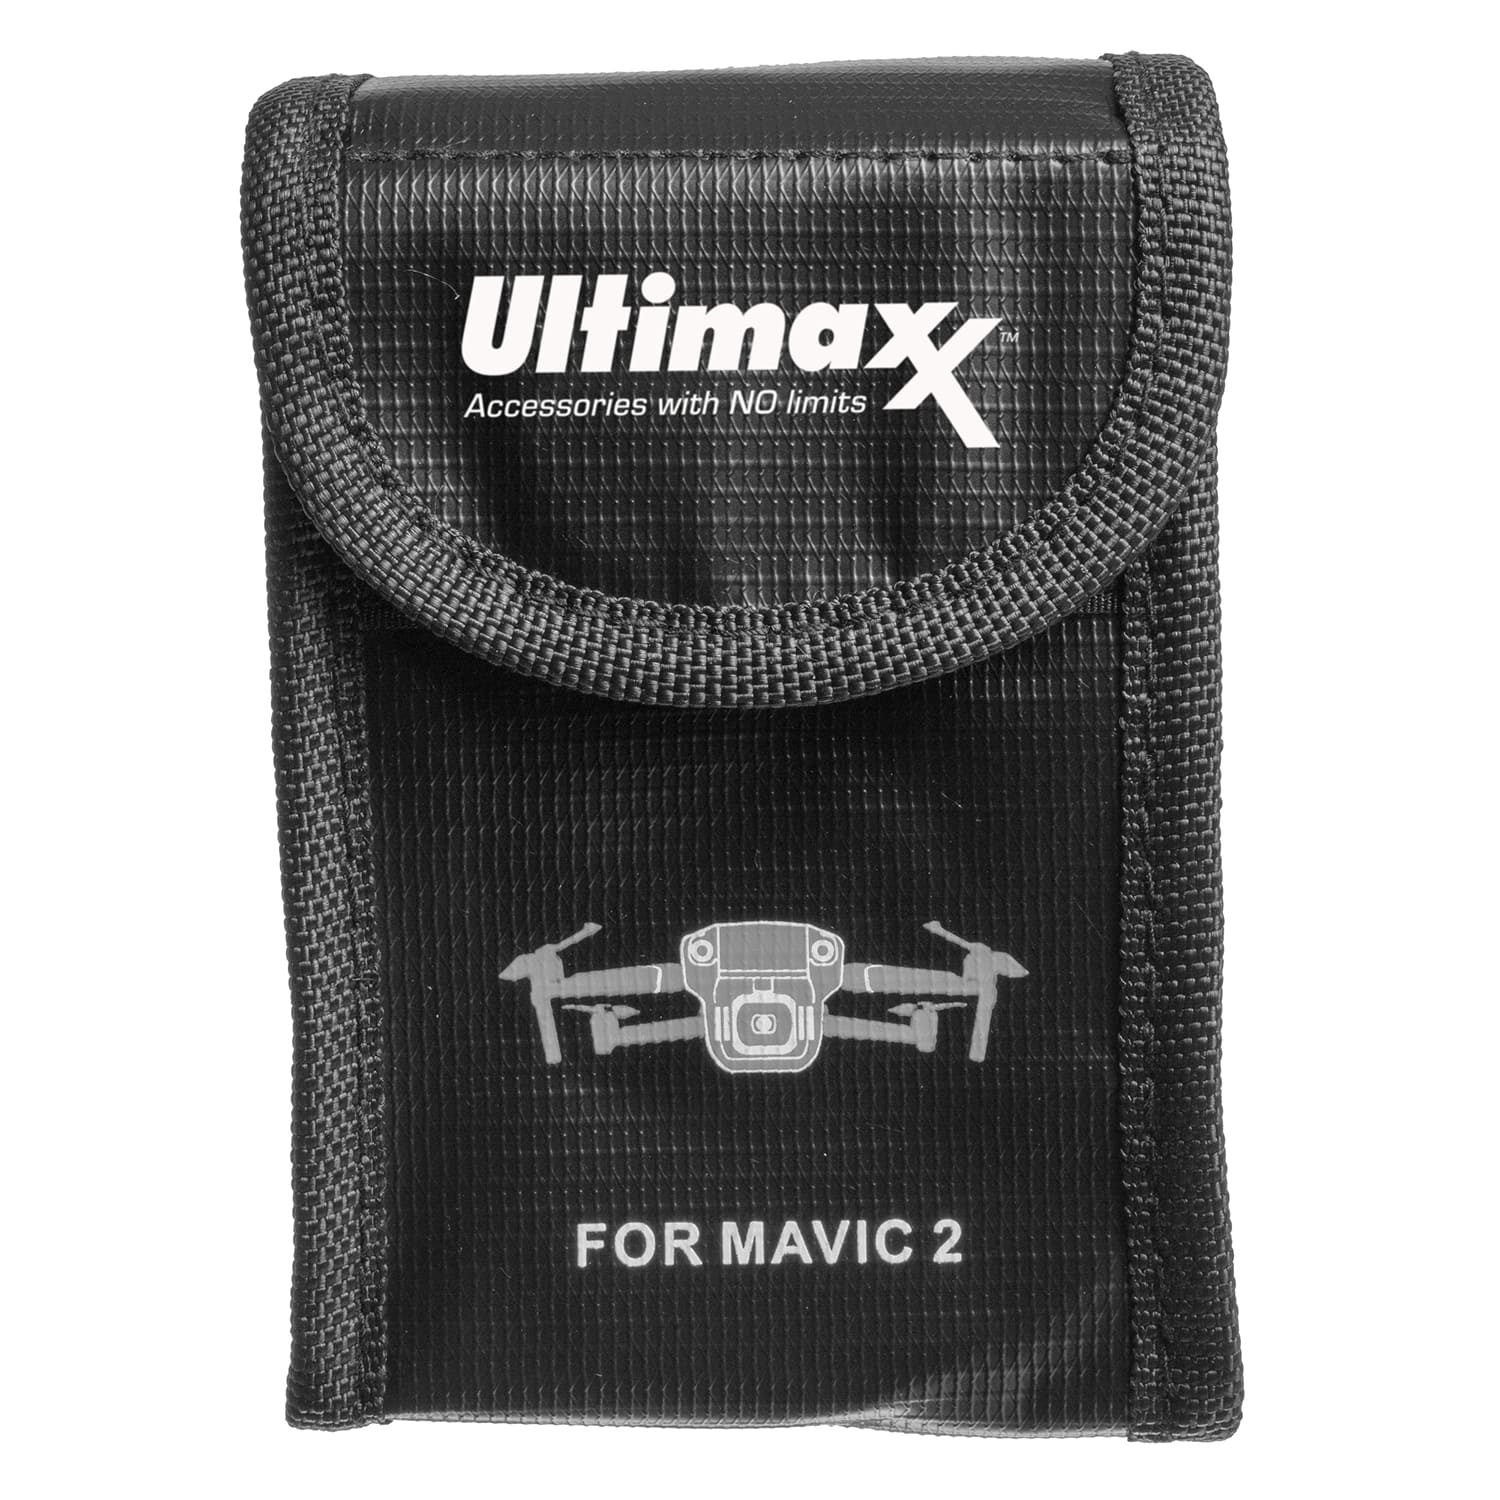 Mavic 2 Battery Protective Bag